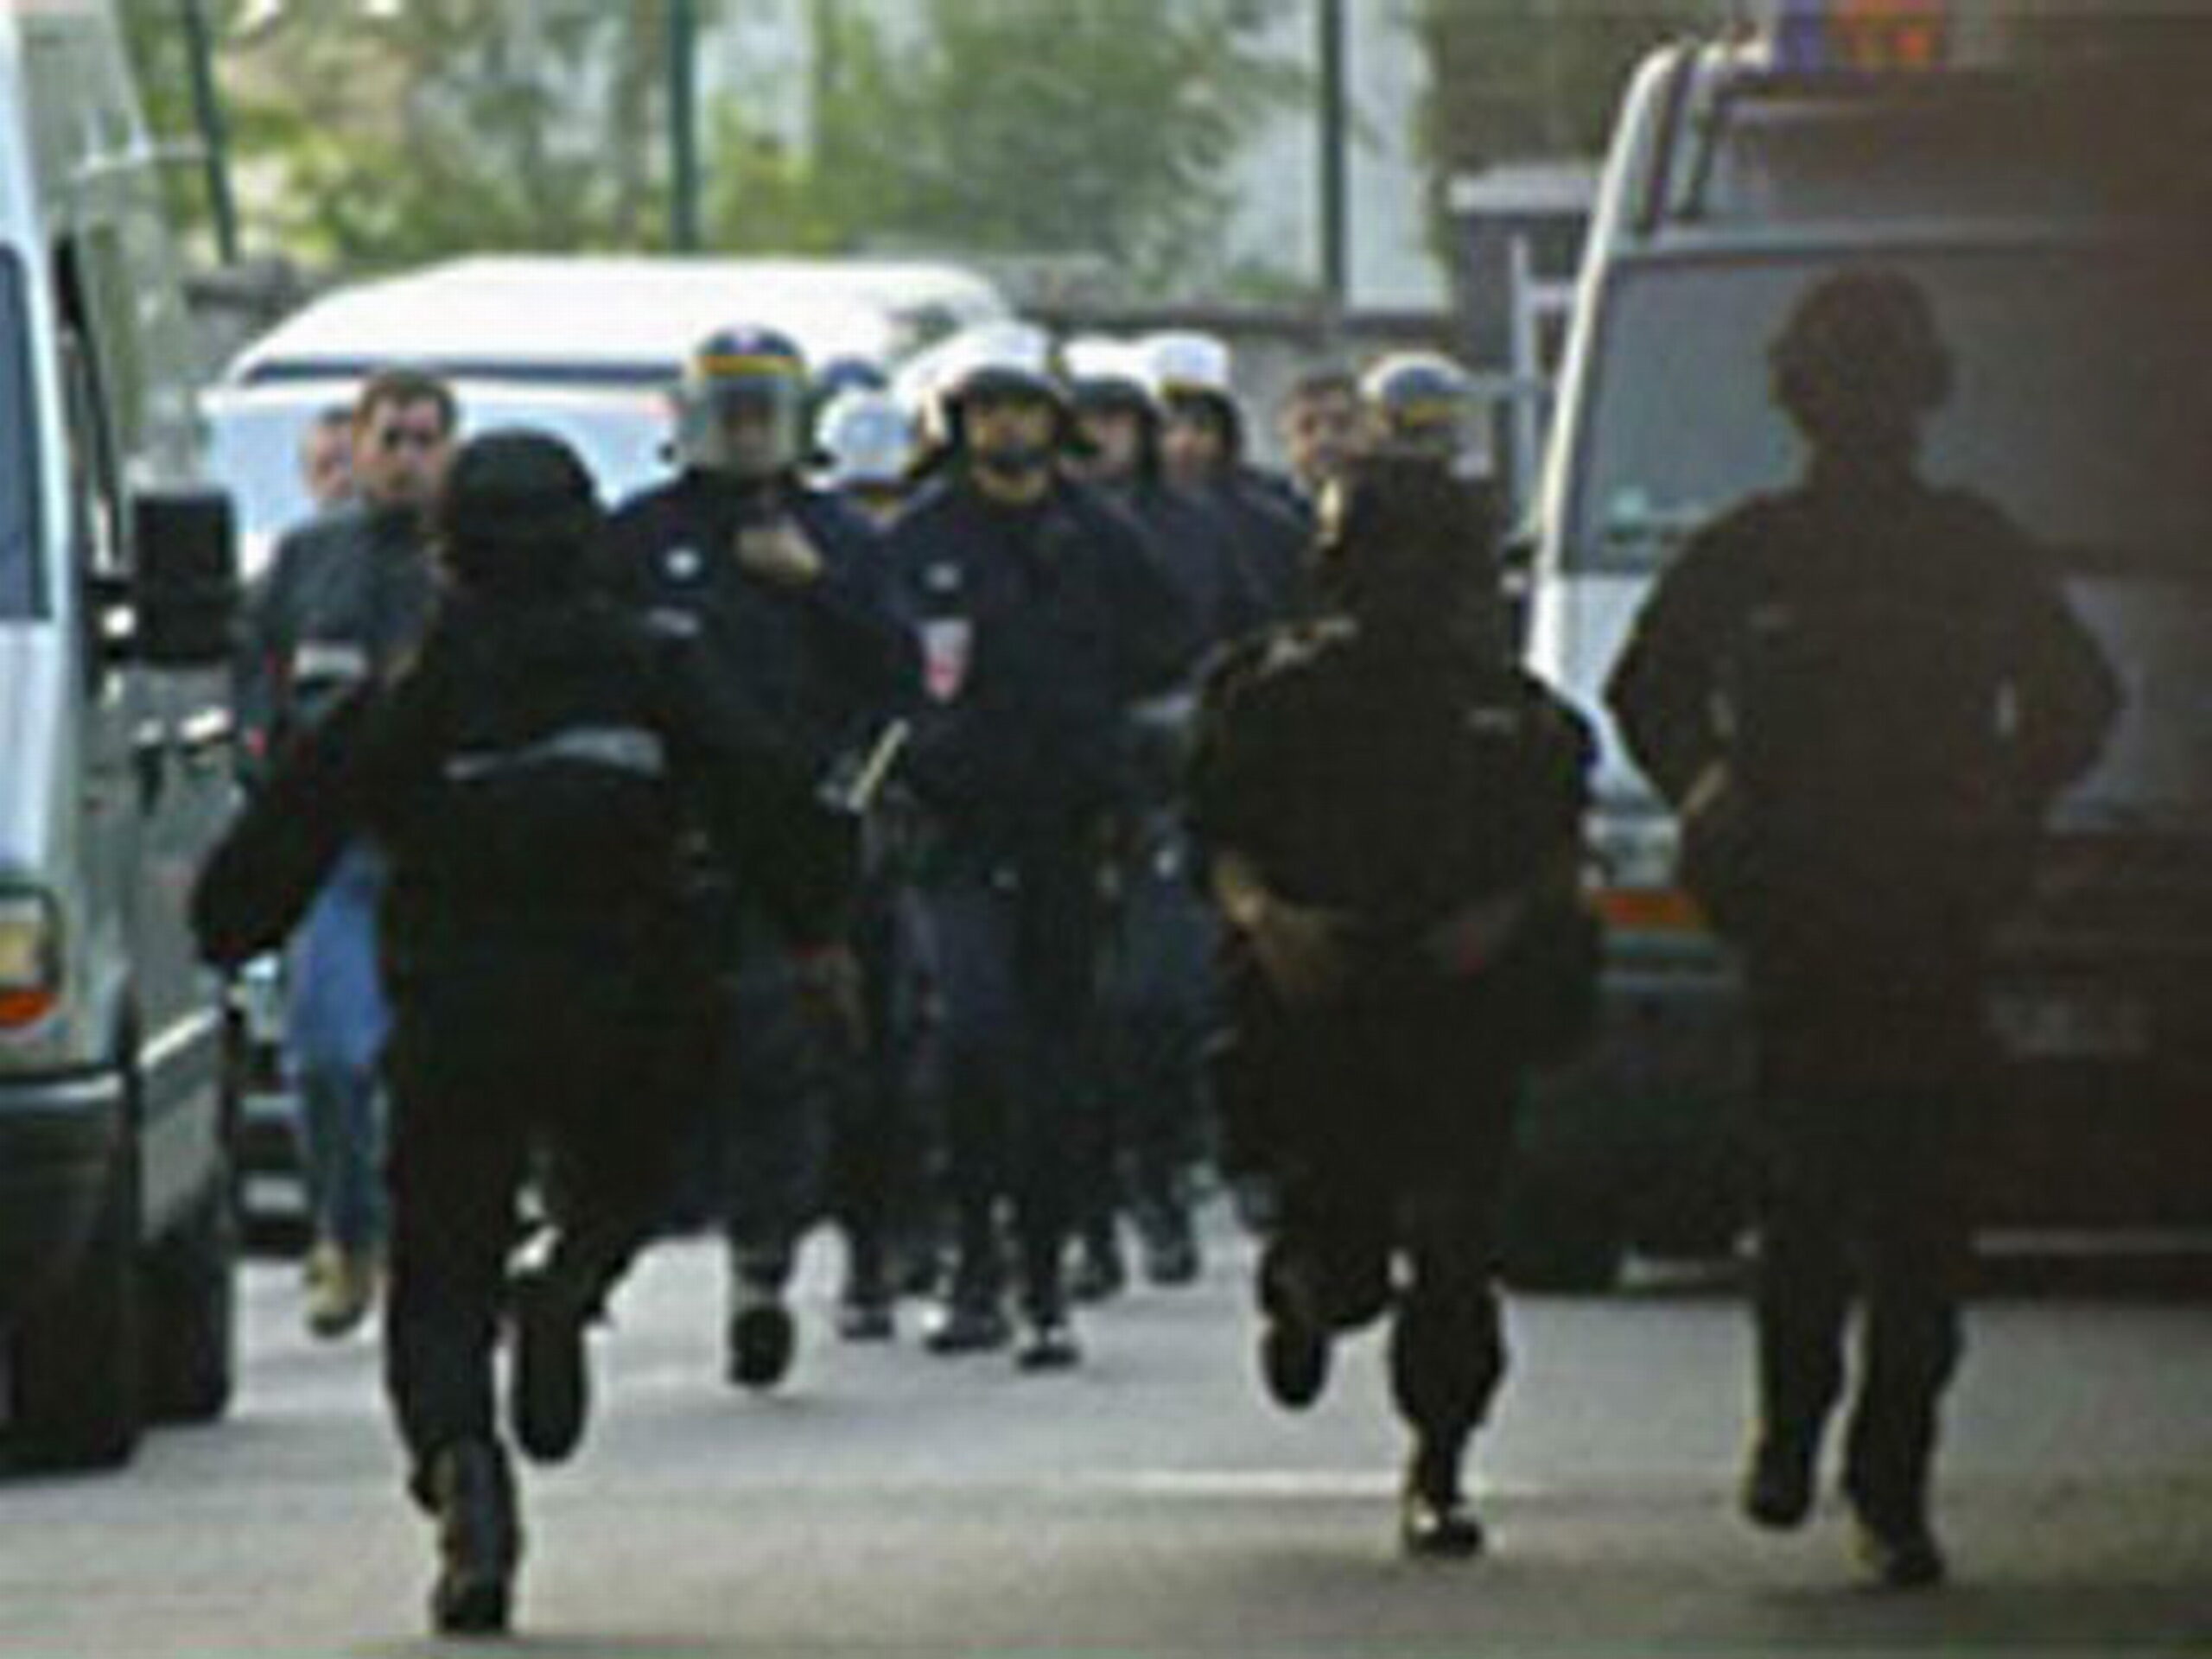 French police arrested MEK members in France